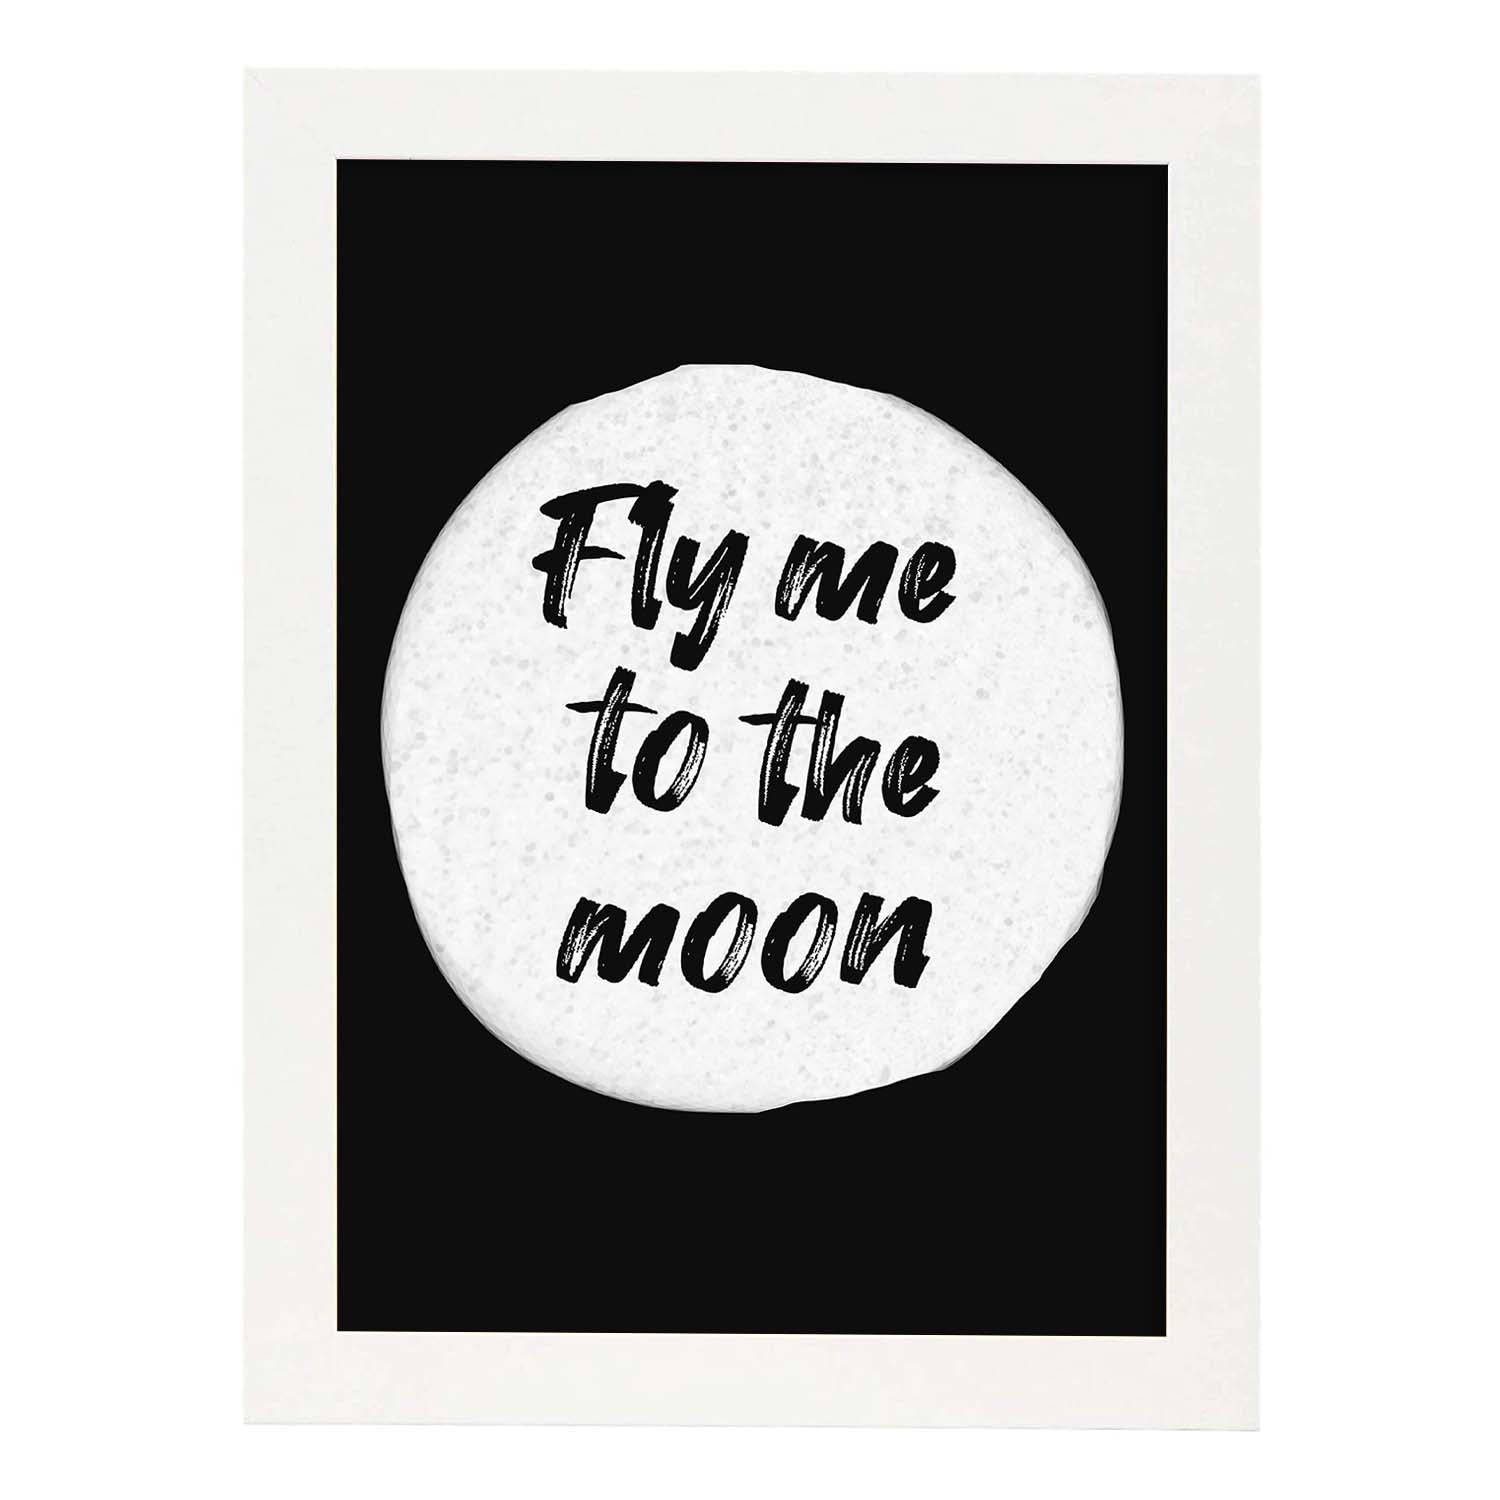 Lamina artistica decorativa con ilustración de fly me to the moon estilo Mensaje inspiracional-Artwork-Nacnic-A4-Marco Blanco-Nacnic Estudio SL